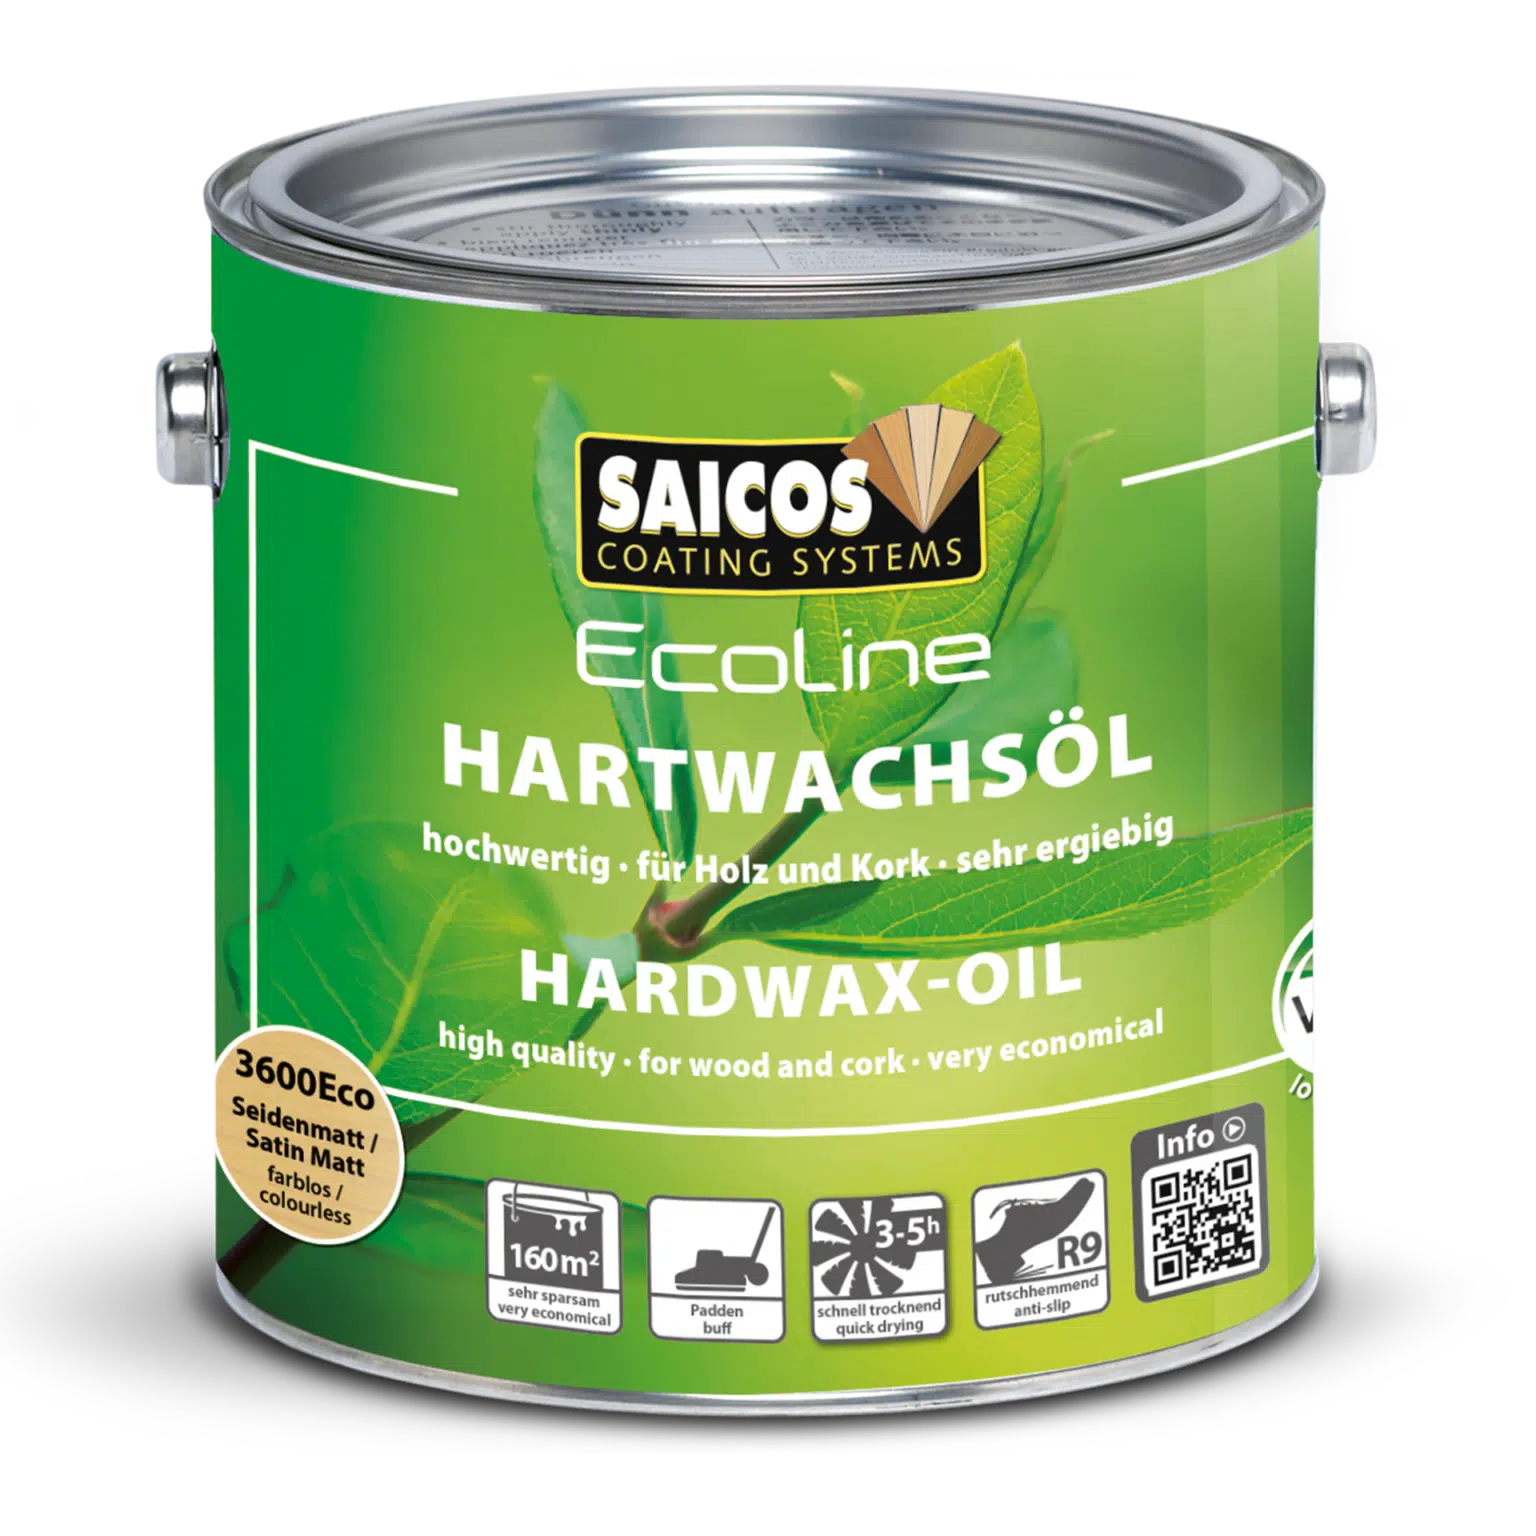 SAICOS Ecoline hard wax oil